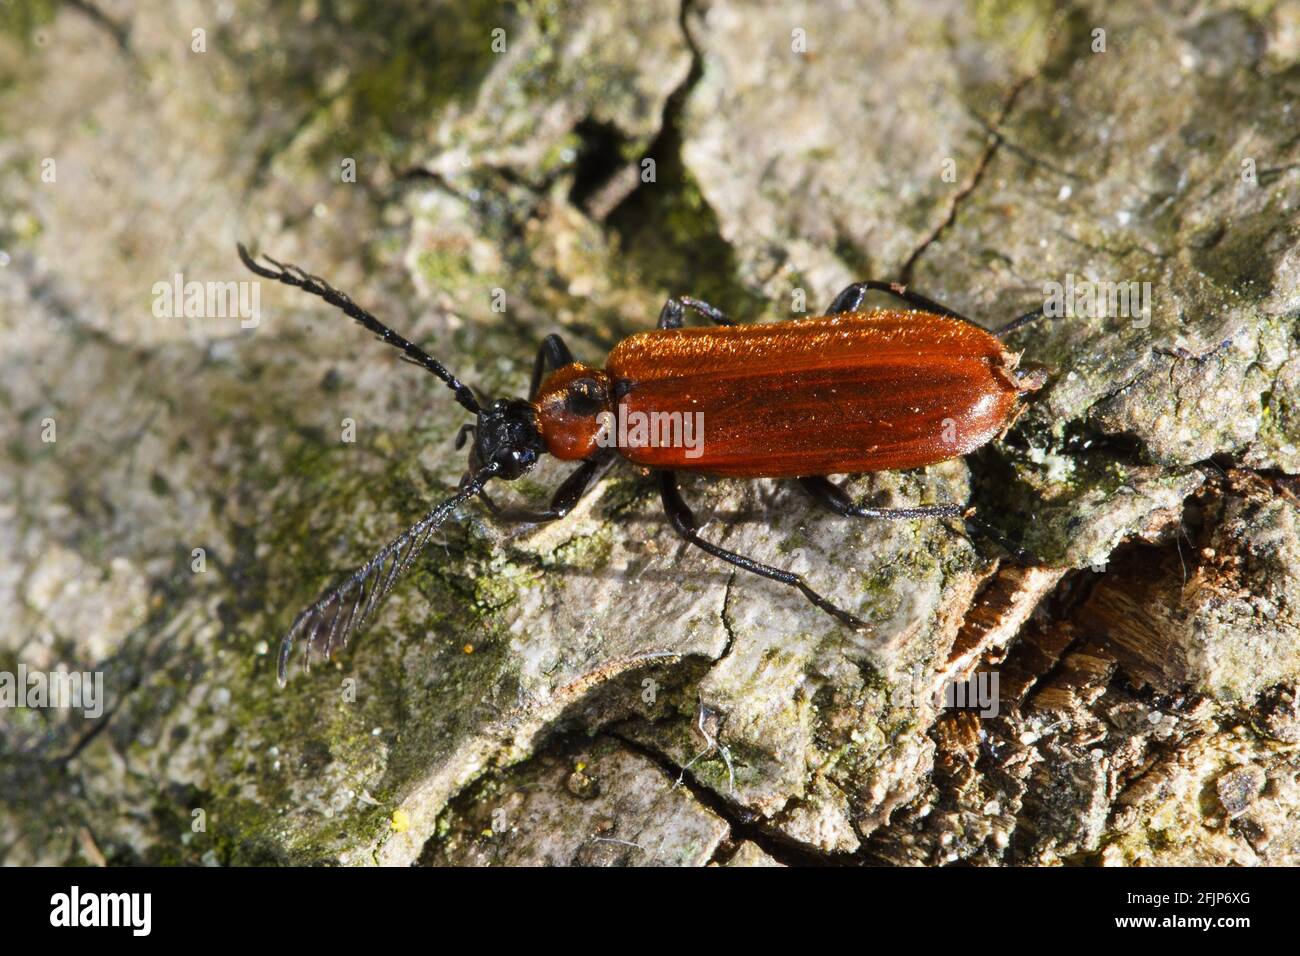 Orange fire beetle, Ahrensburg tunnel valley nature reserve, Hamburg (Schizotus pectinicornis), Germany Stock Photo